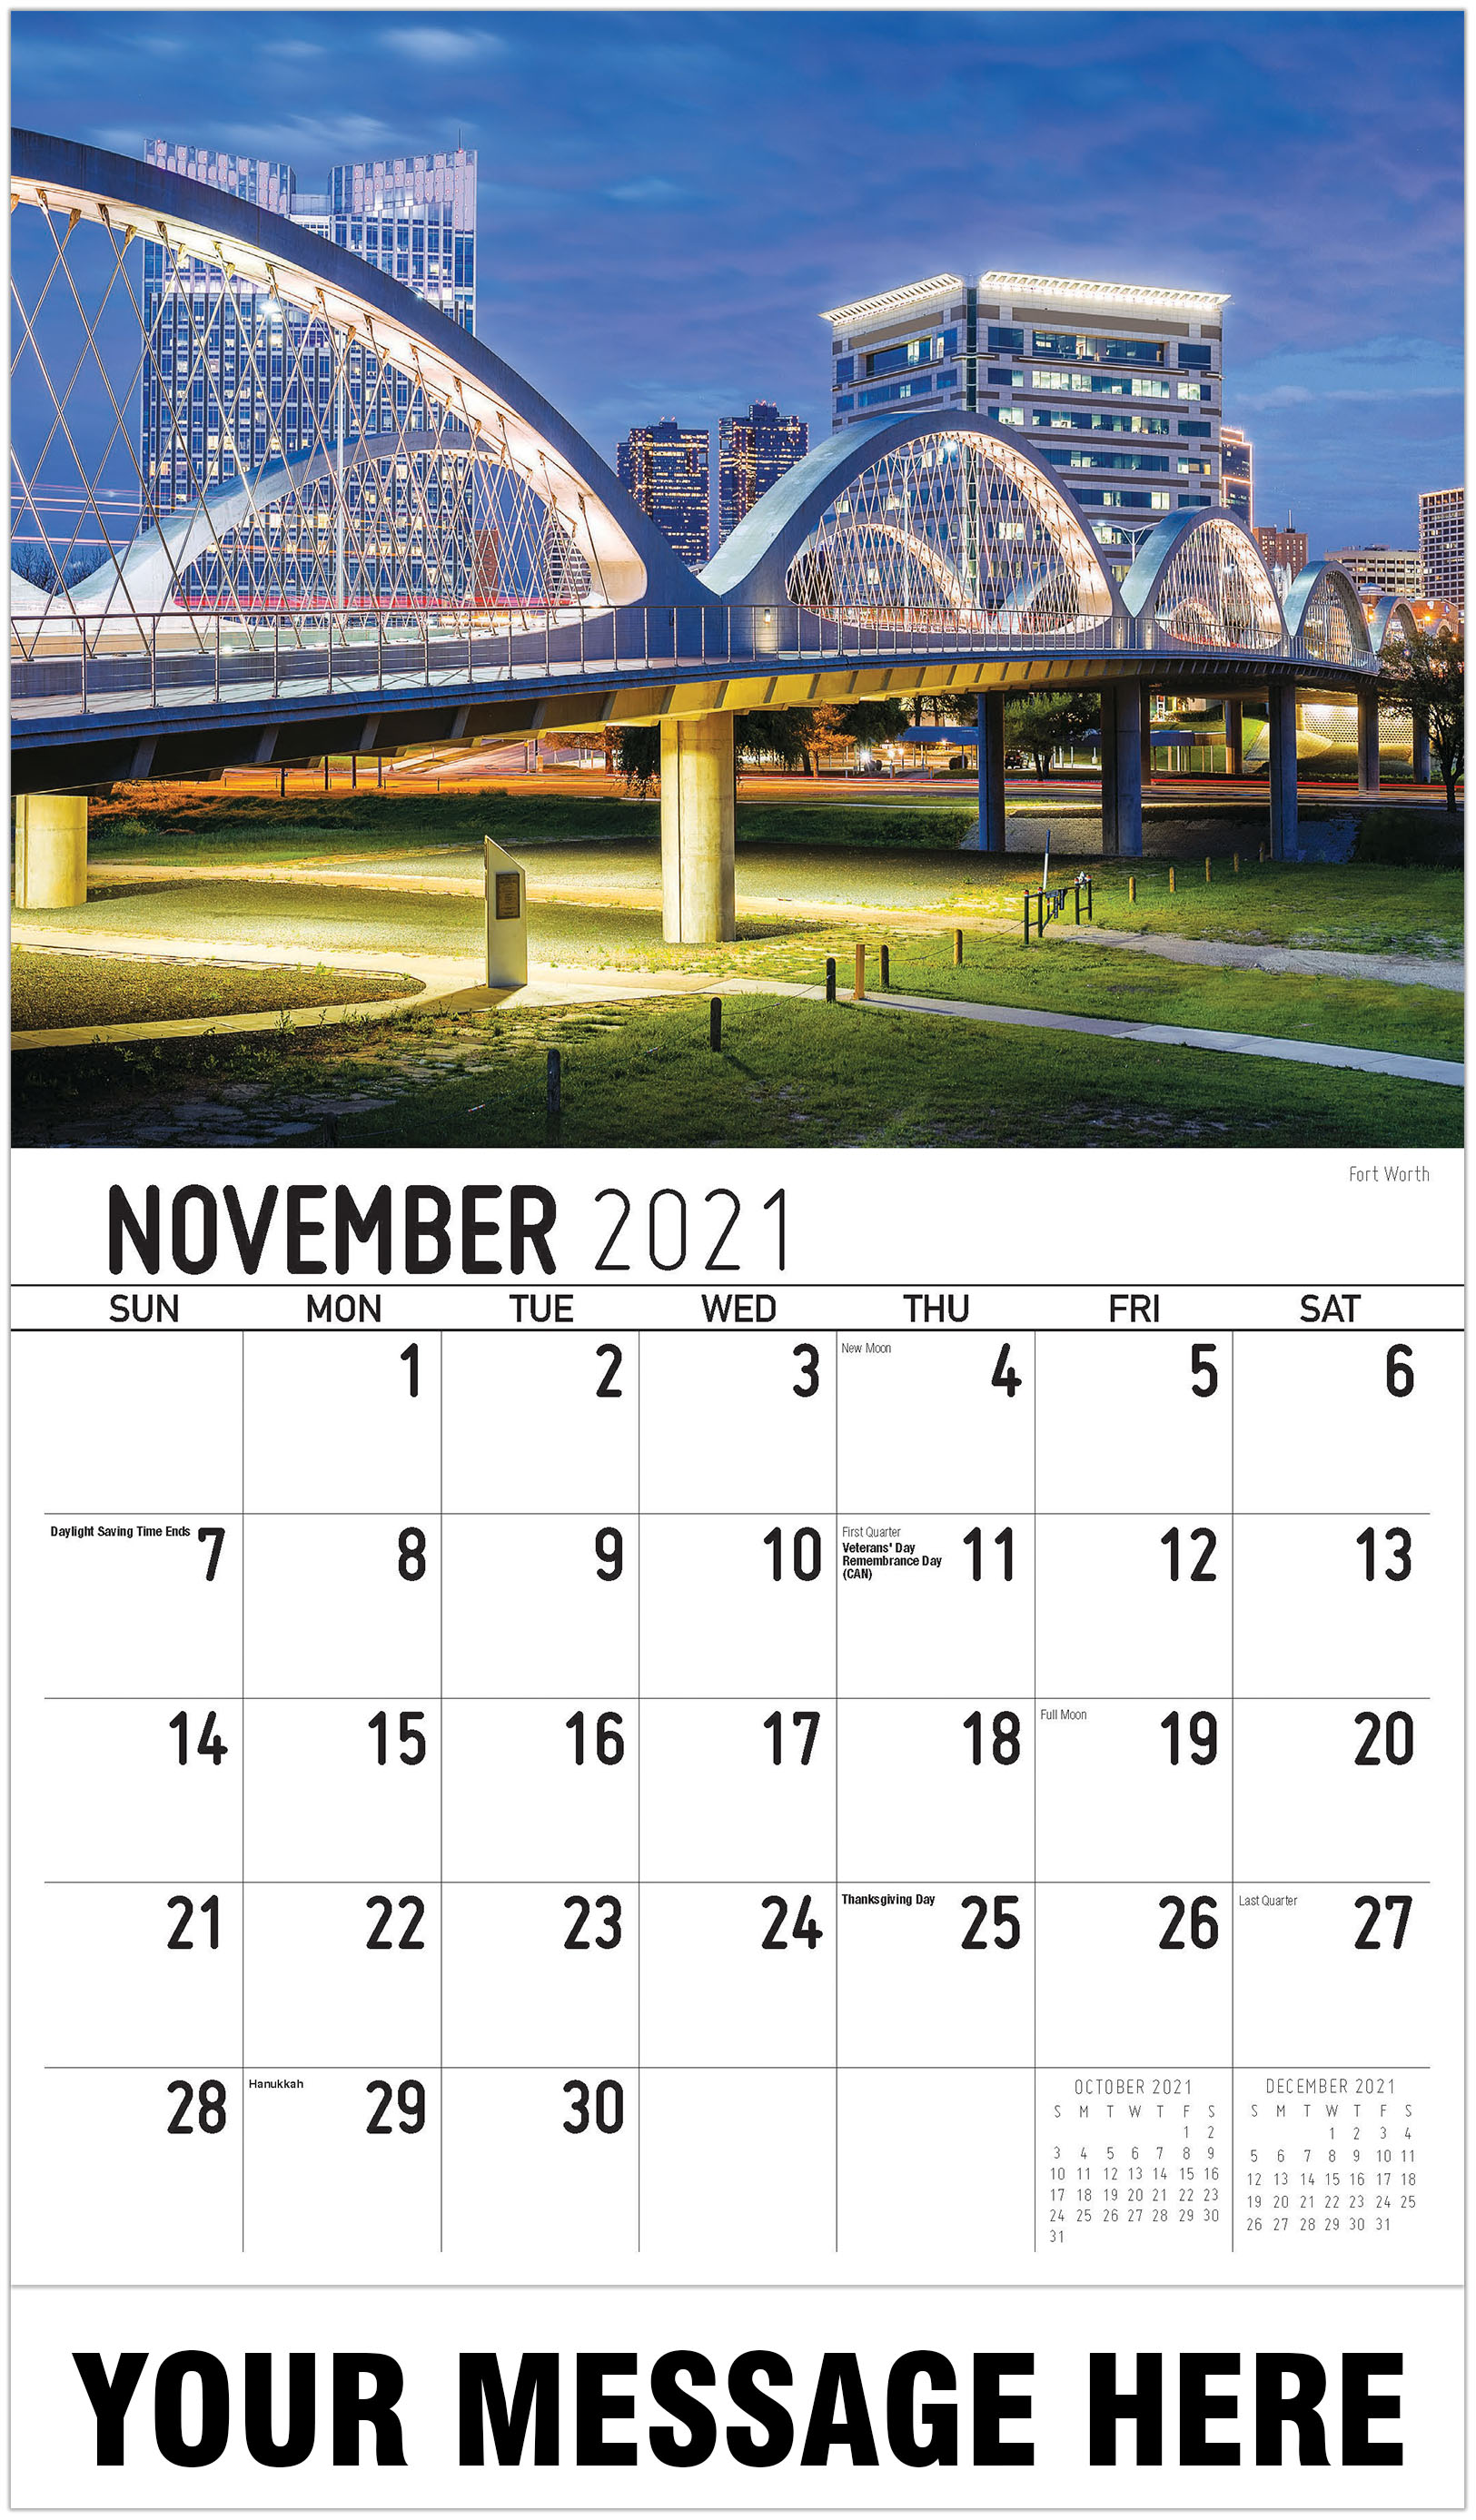 Fort Worth Events Calendar 2021 Calendar Page